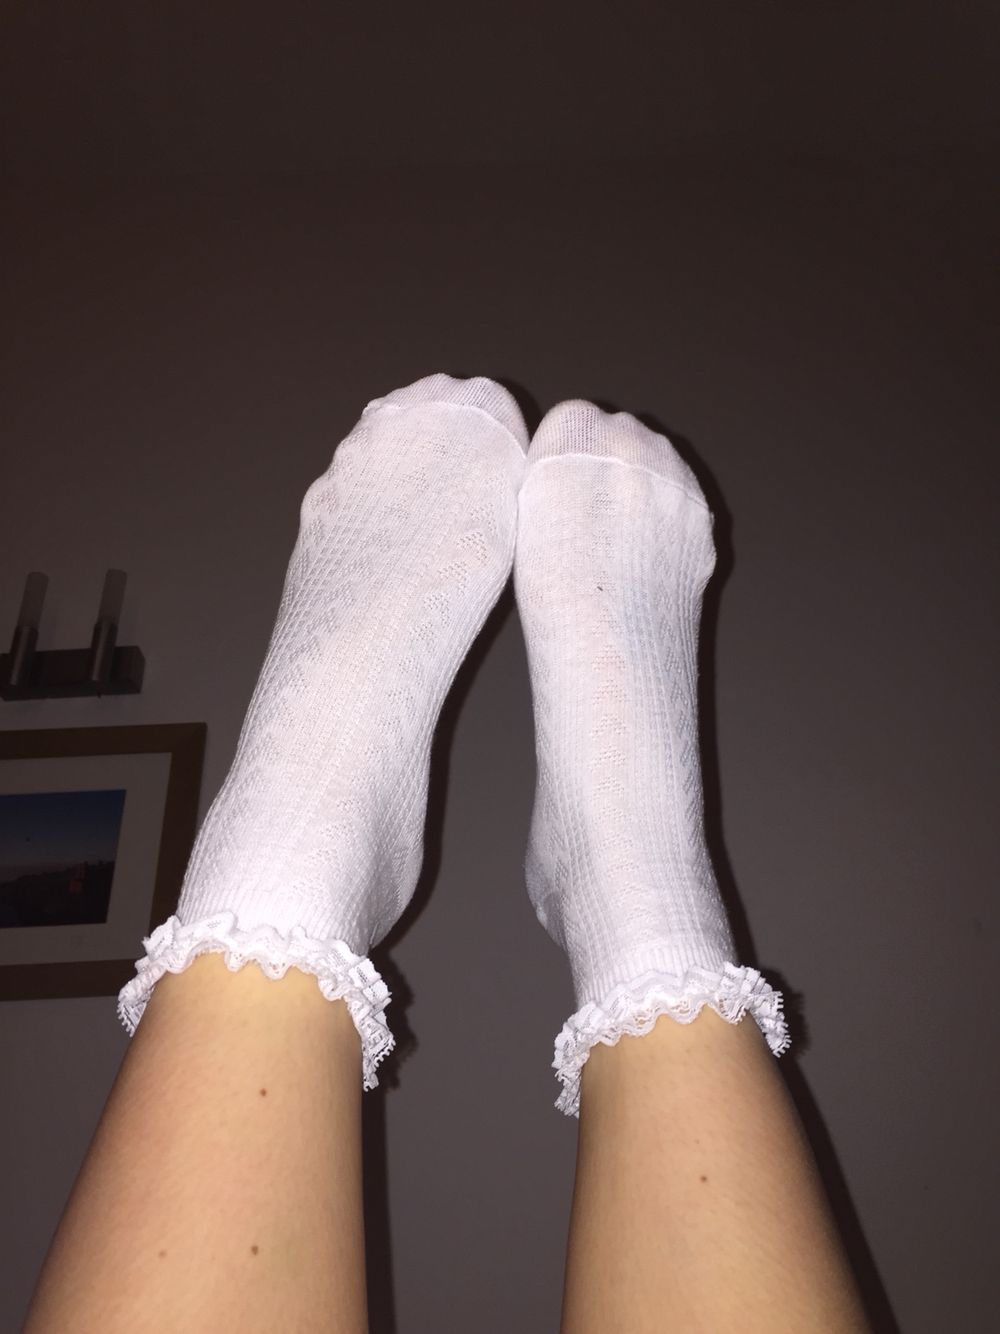 doug simons reccomend sexy feet in socks pic